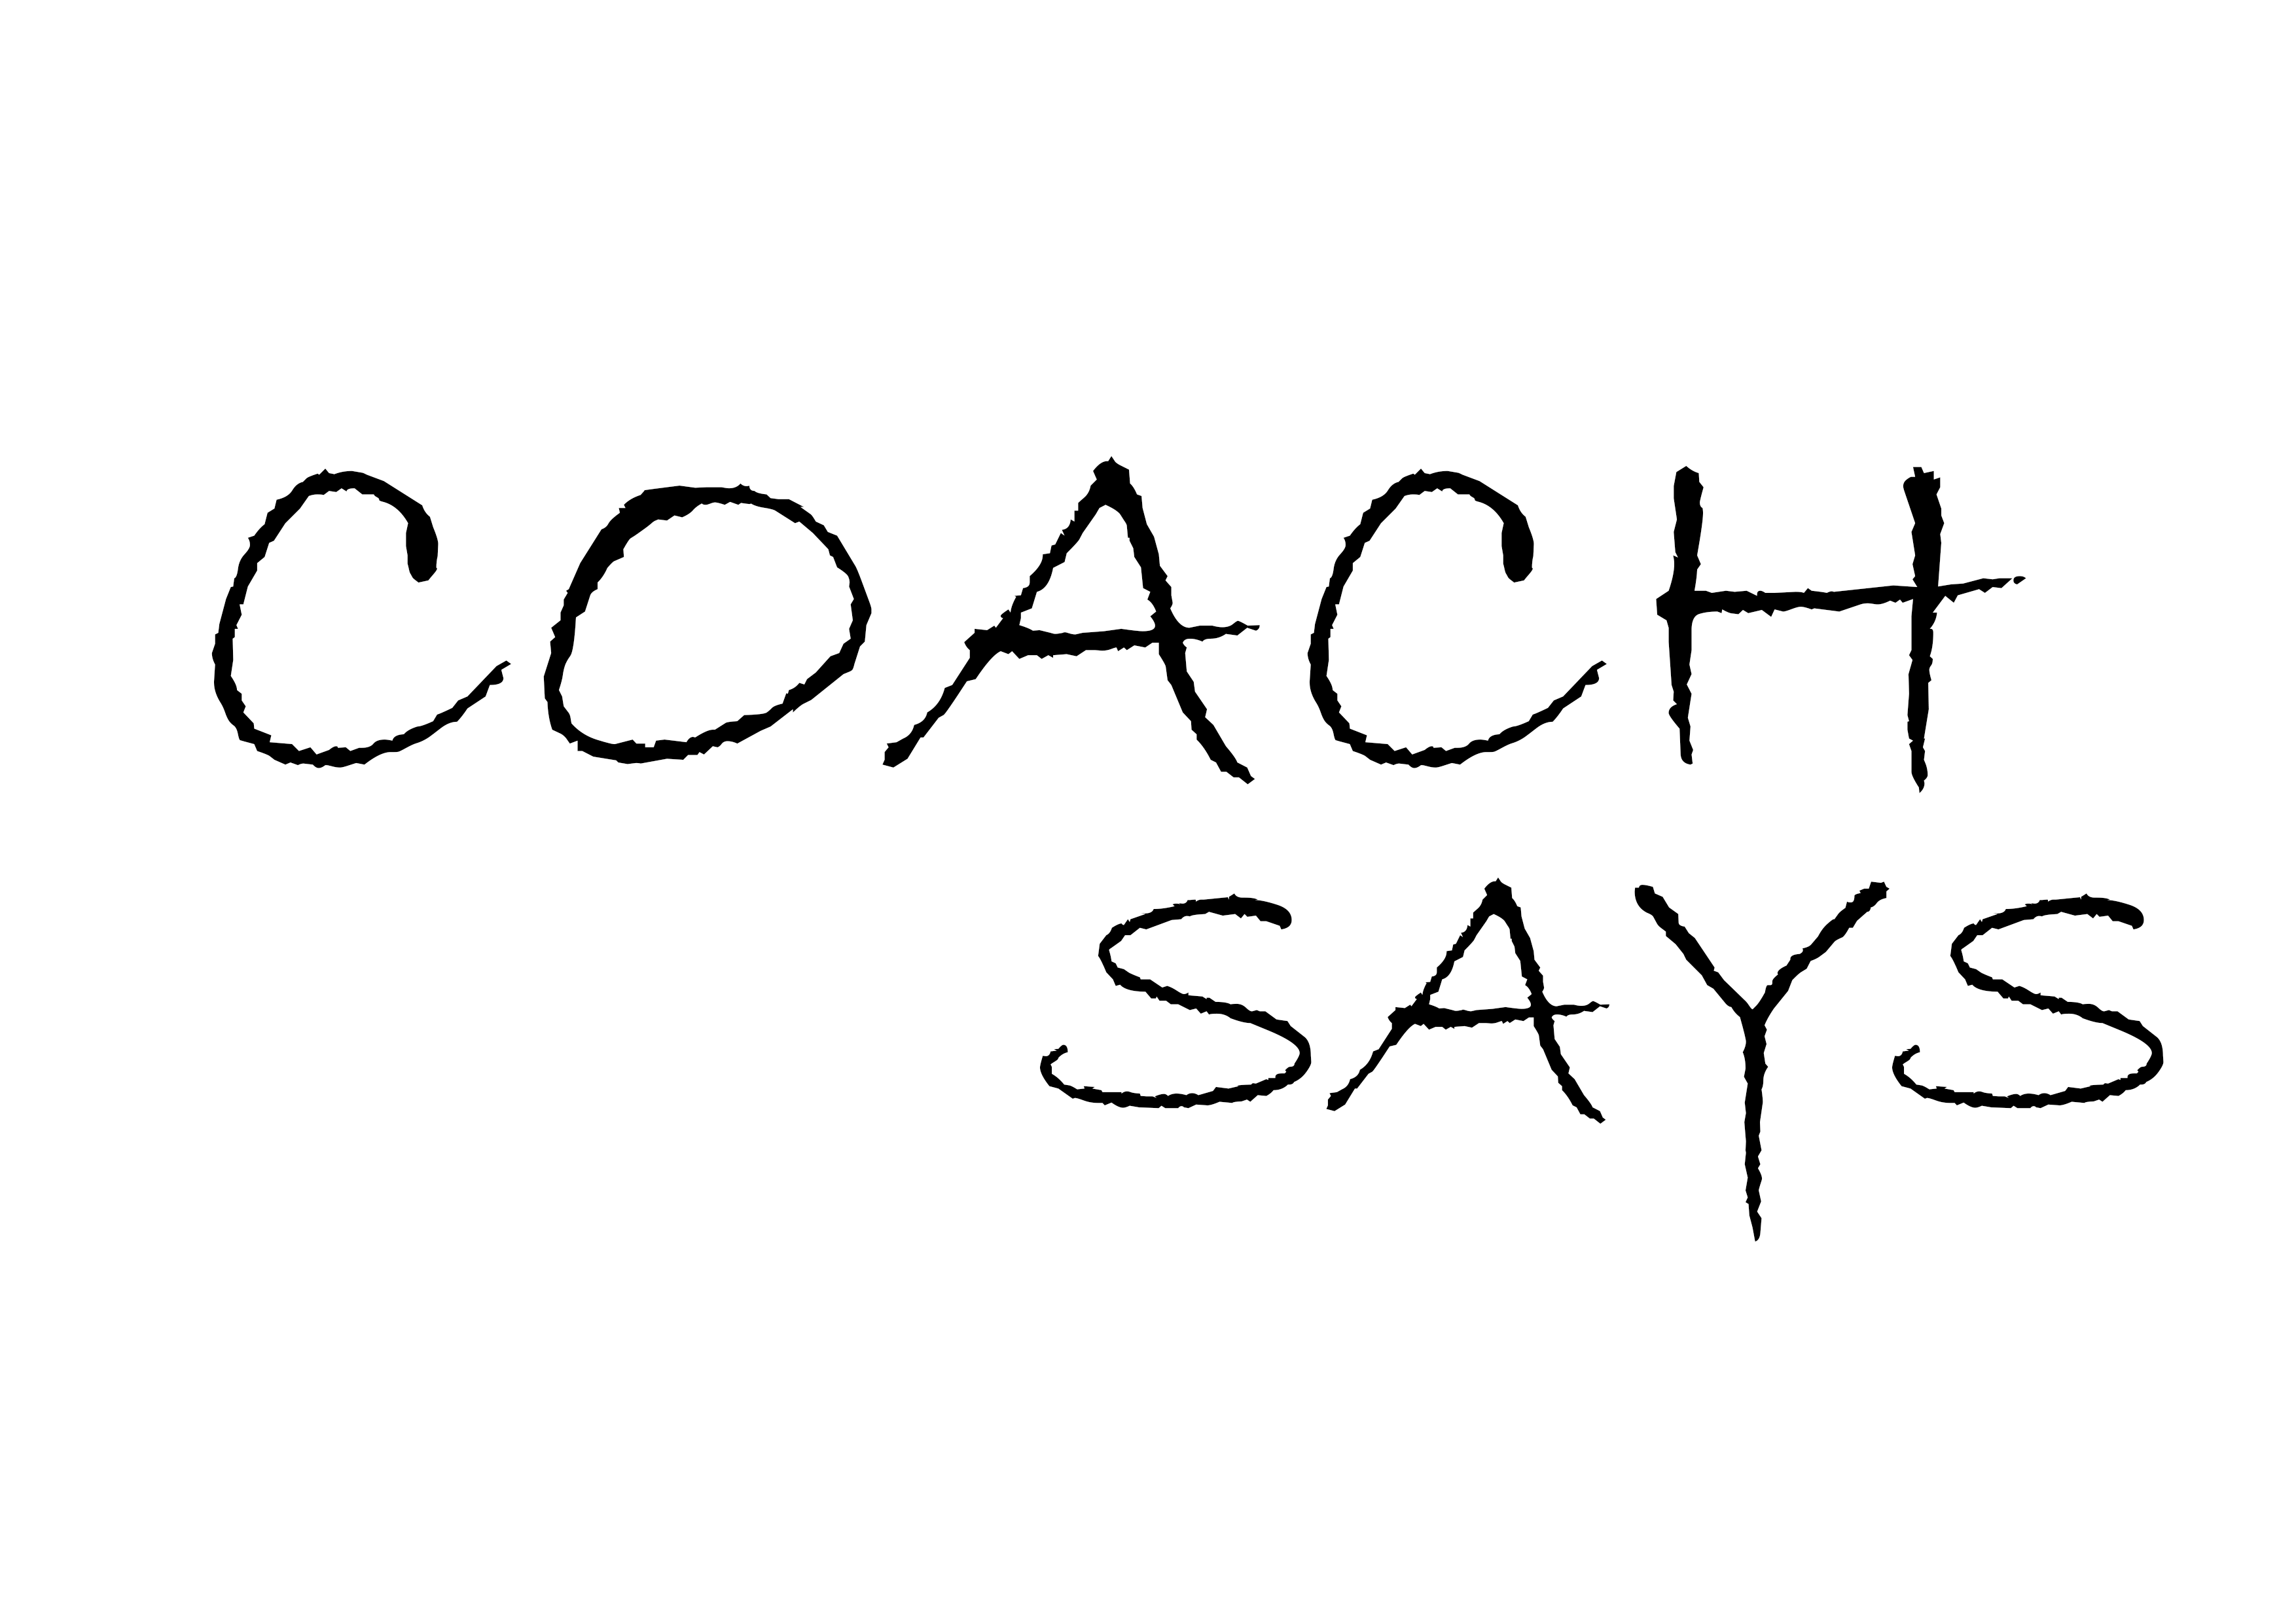 Coach says sign